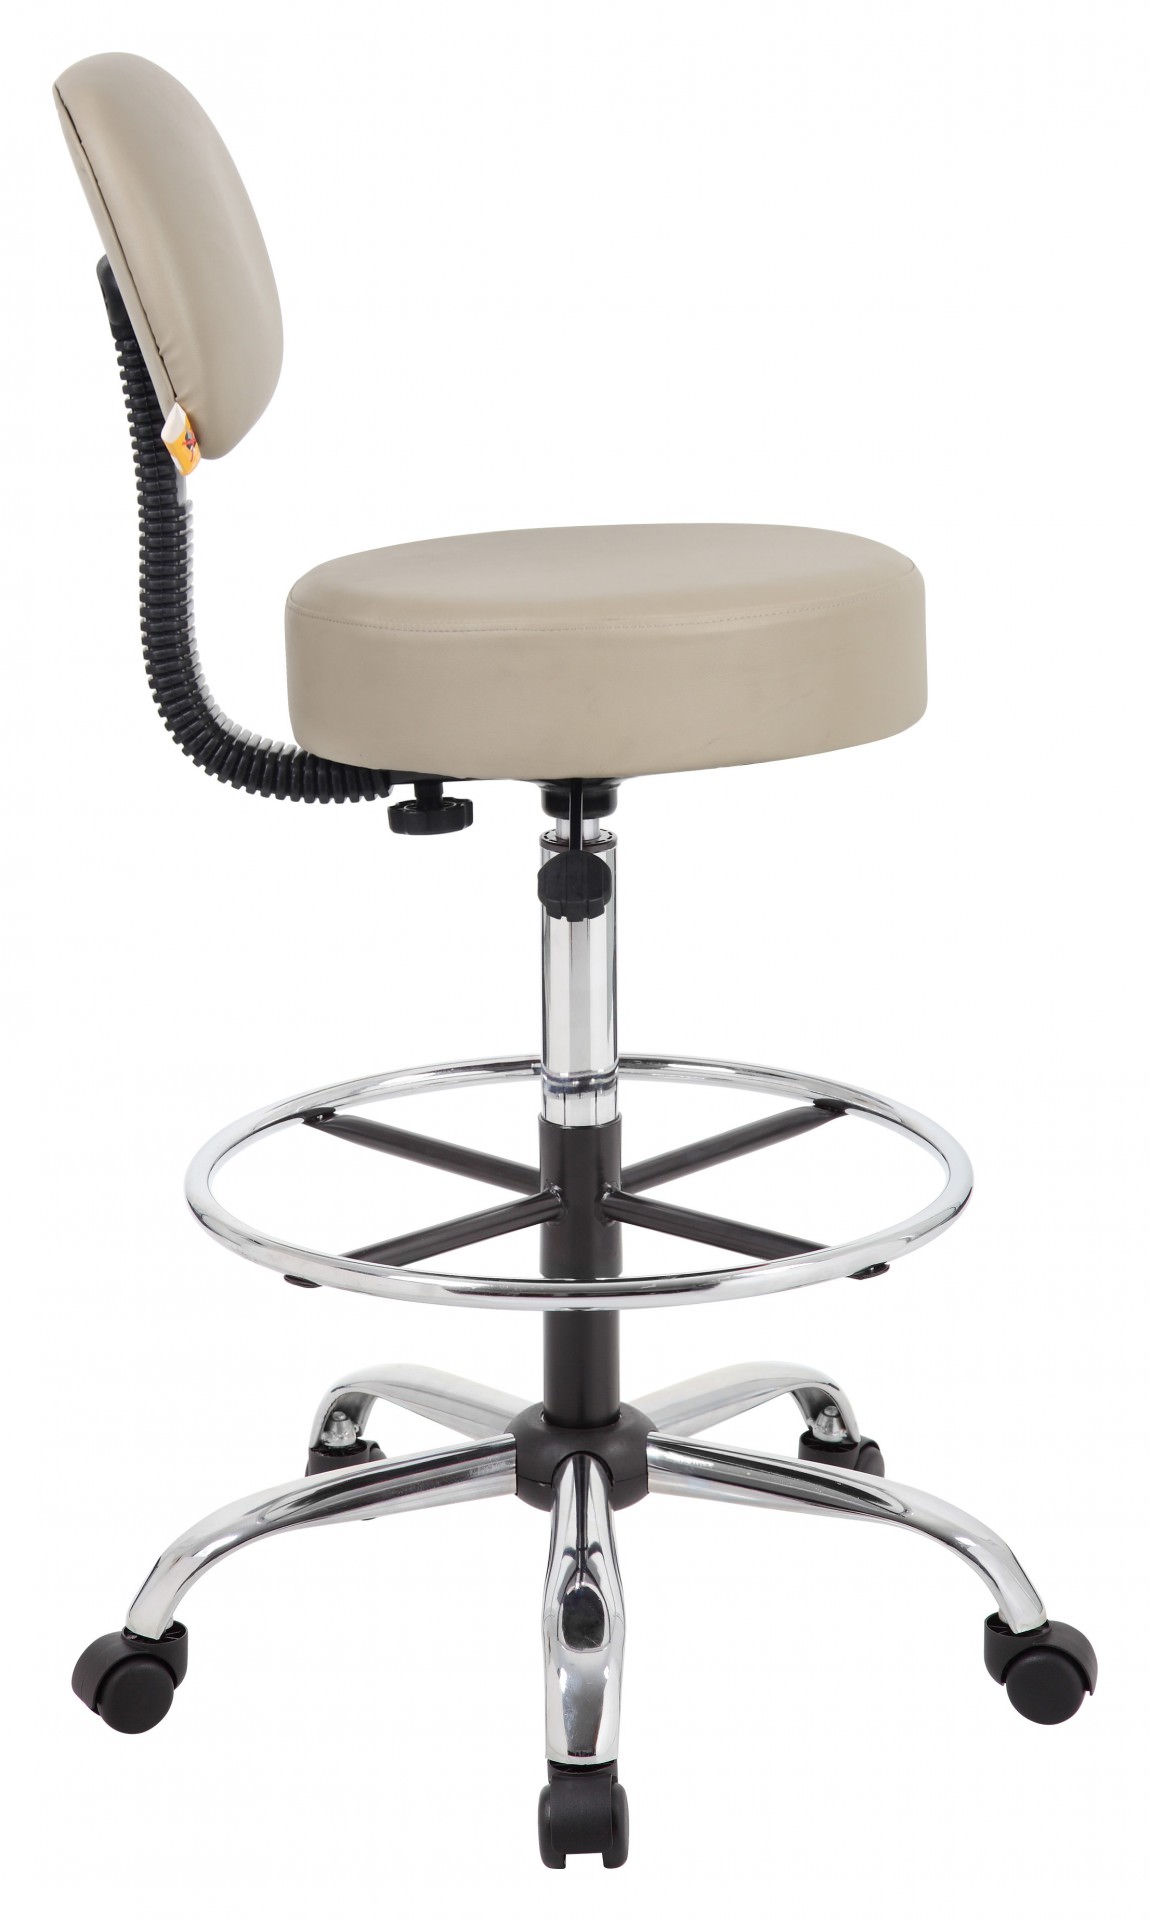 https://madisonliquidators.com/images/p/1150/27241-tall-medical-stool-with-back-2.jpg